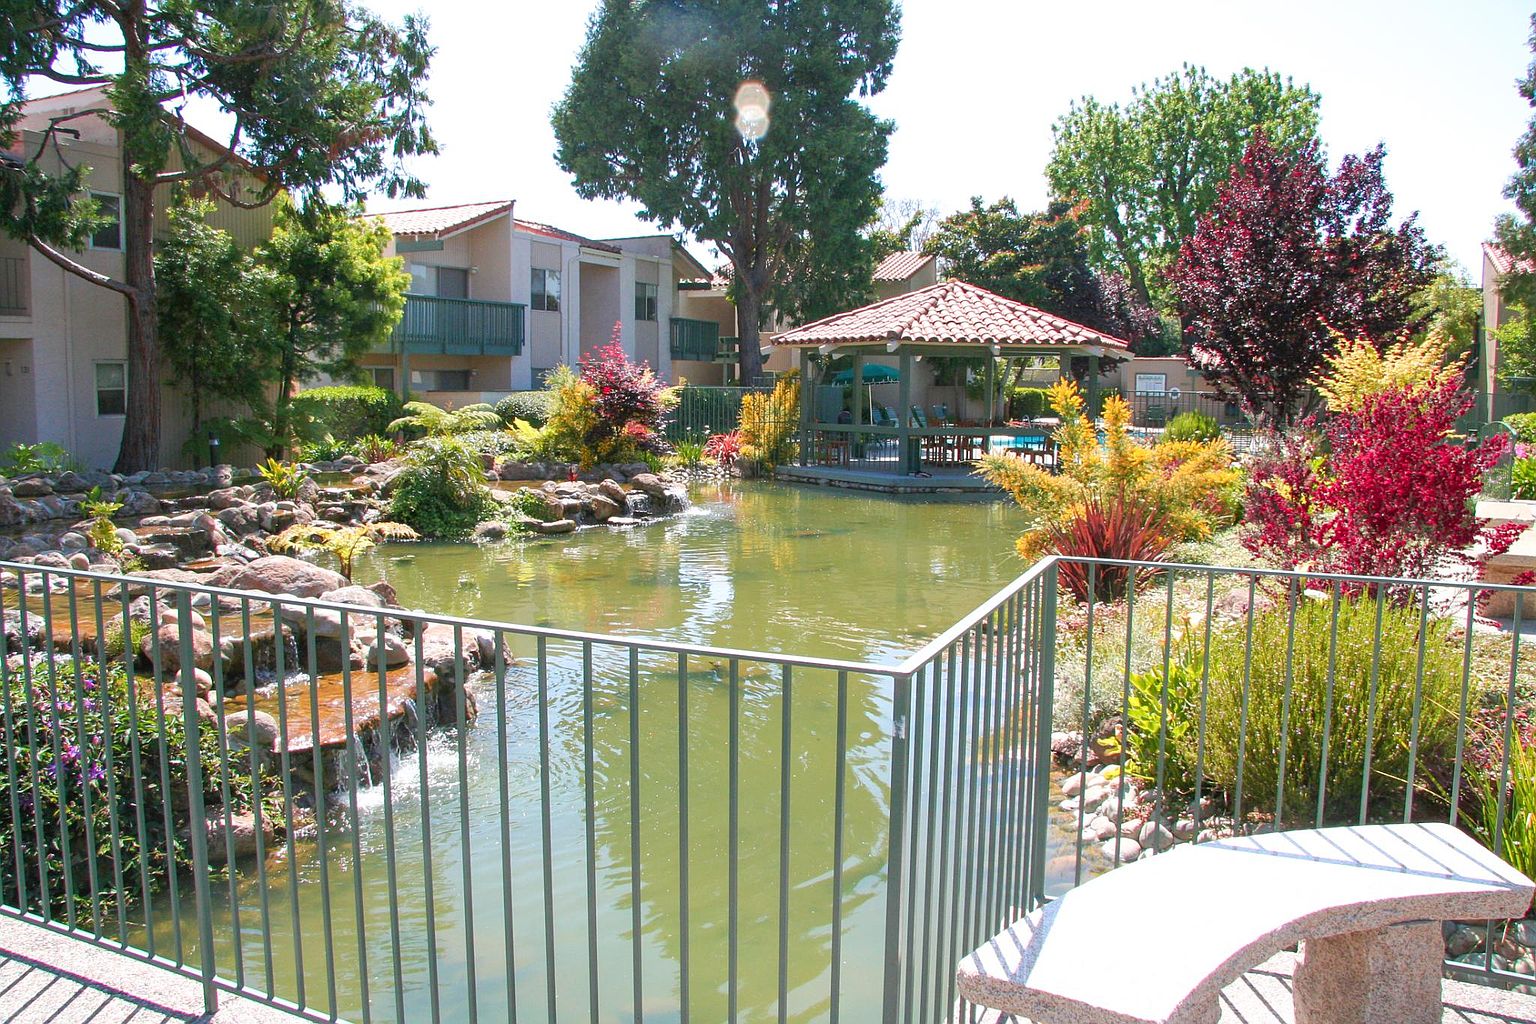 Spring Creek Apartment Rentals Santa Clara